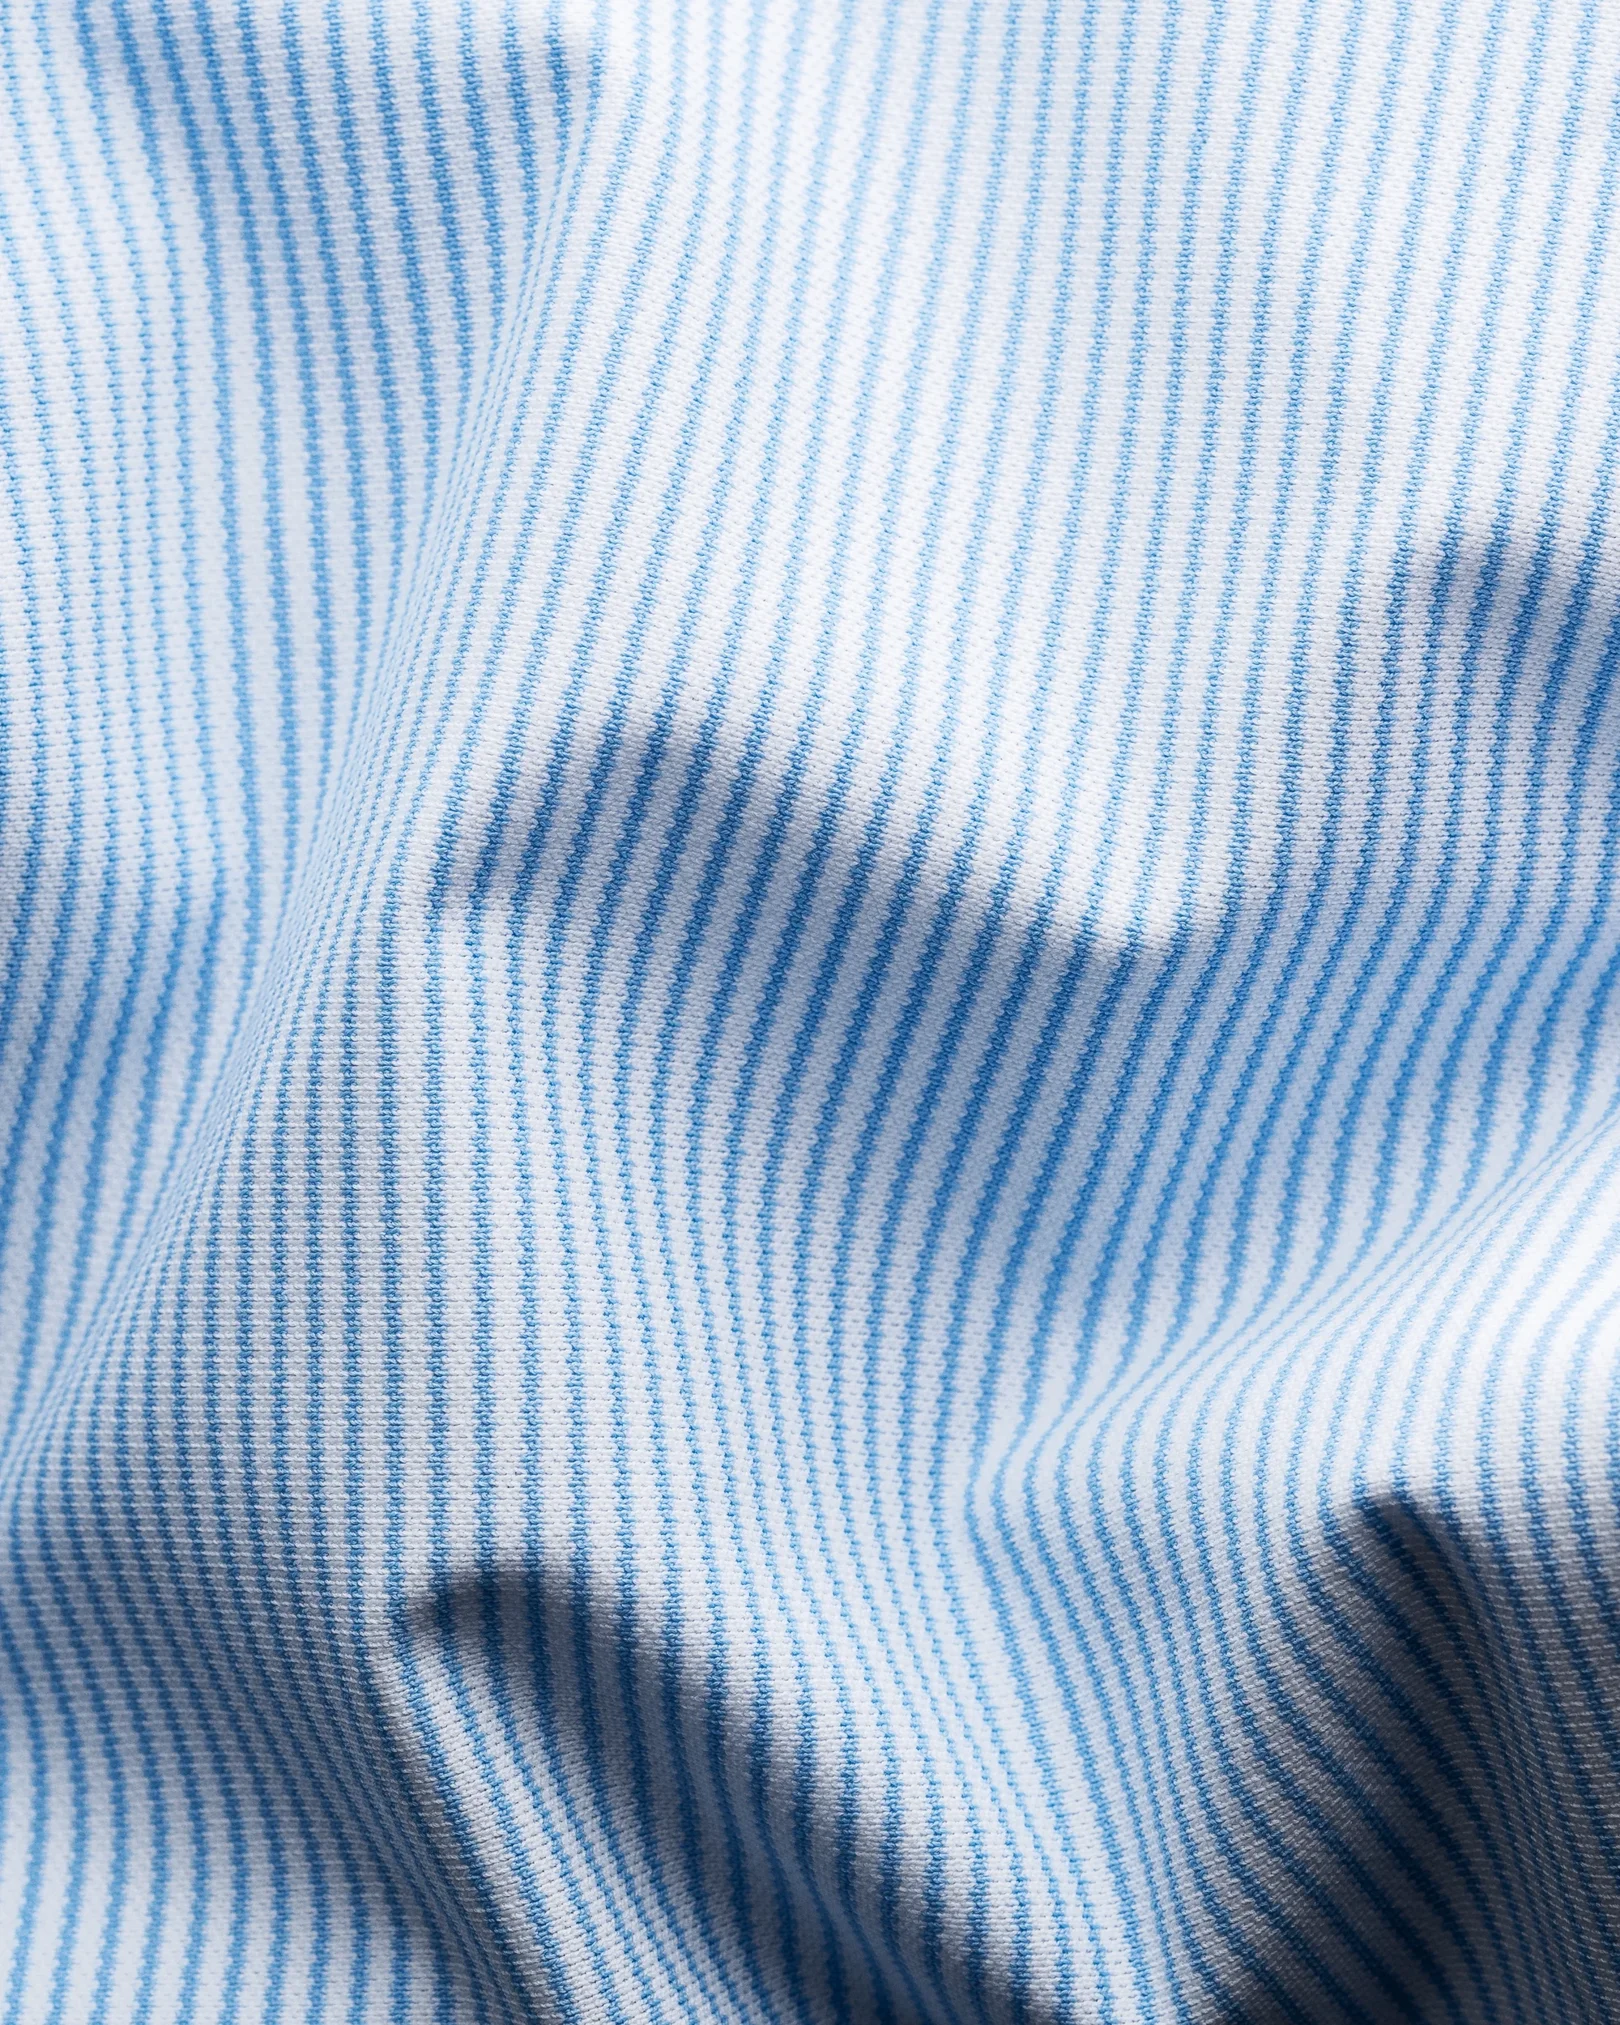 Eton - Striped Four-Way Stretch Shirt